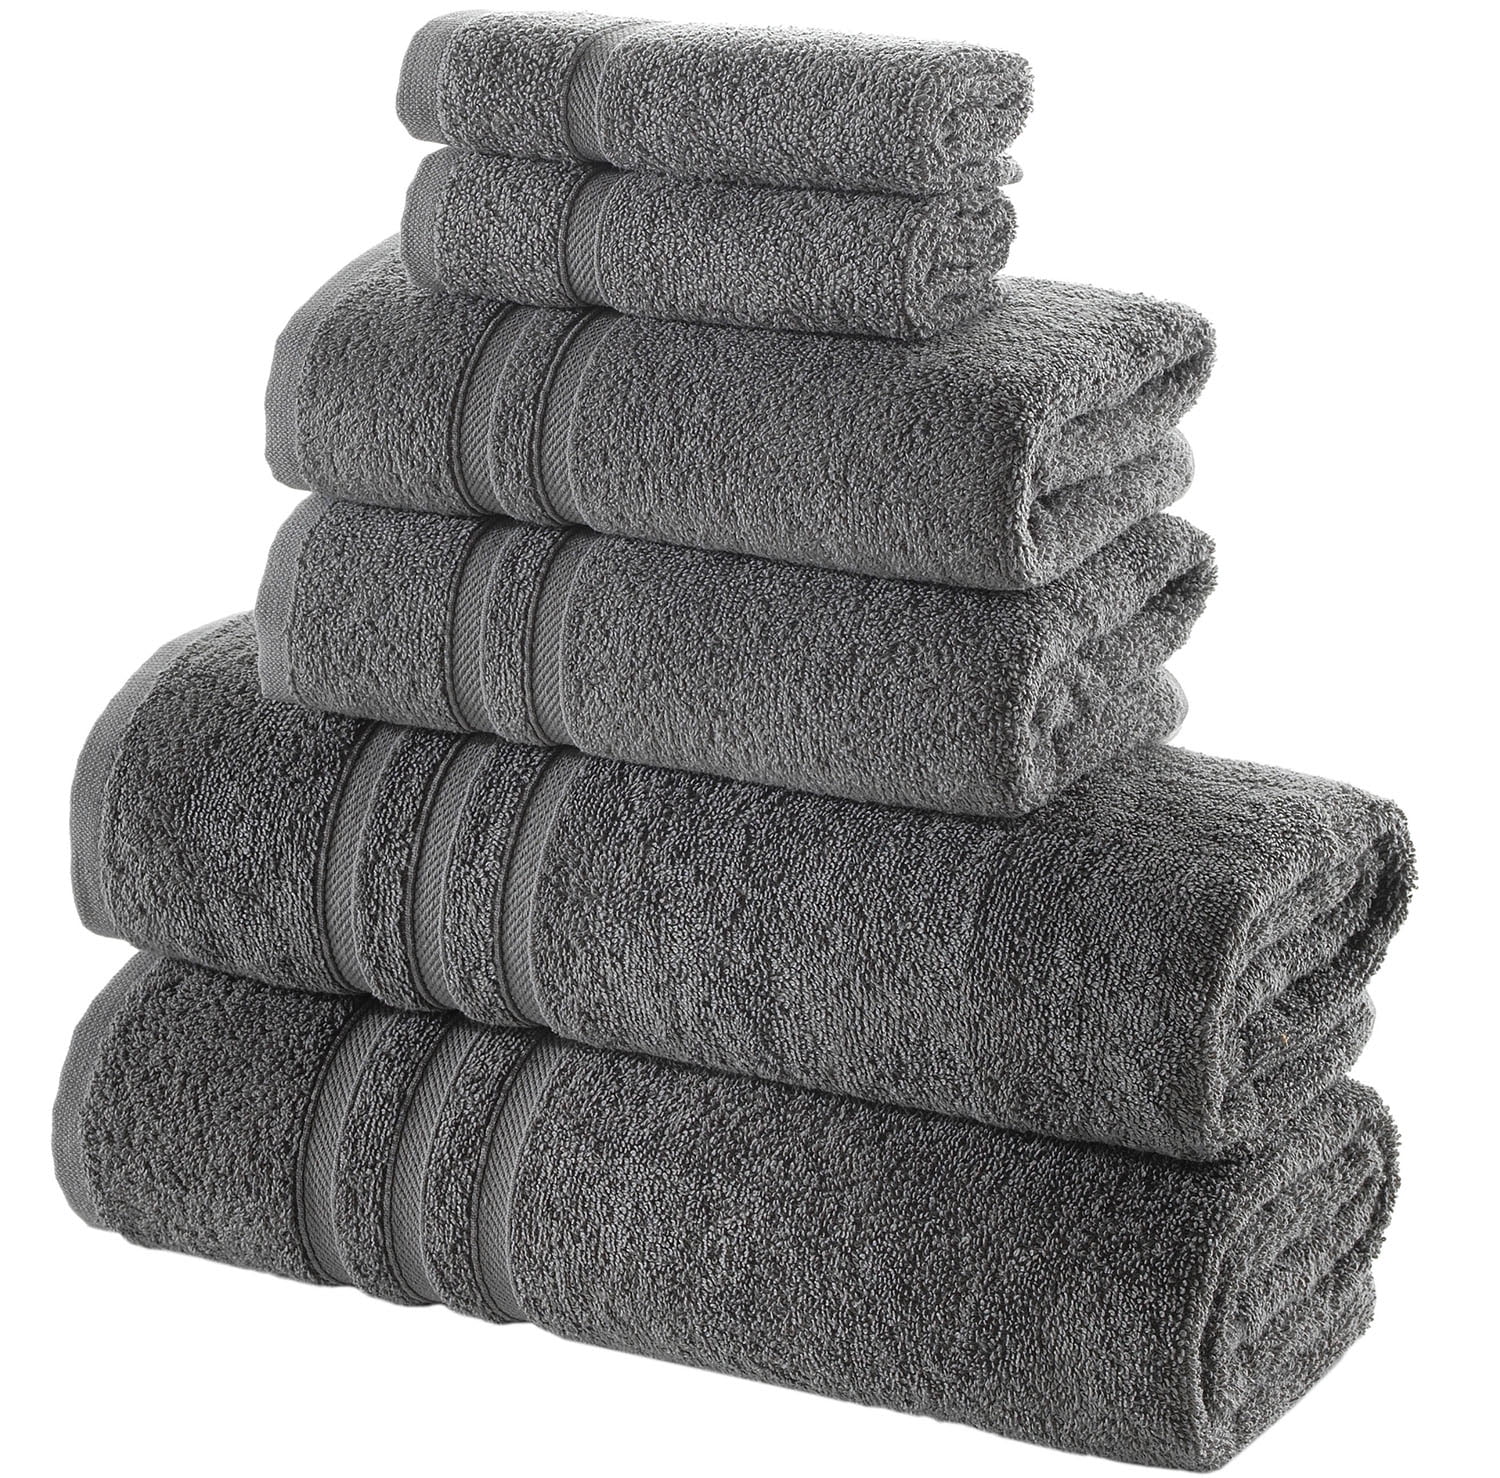 Lane Linen 6 PC Bathroom Towels Sets Clearance- 2 Large Bath Towels Set, 2 Turkish Hand Towels for Bathroom Clearance & 2 Wash Towels for Body